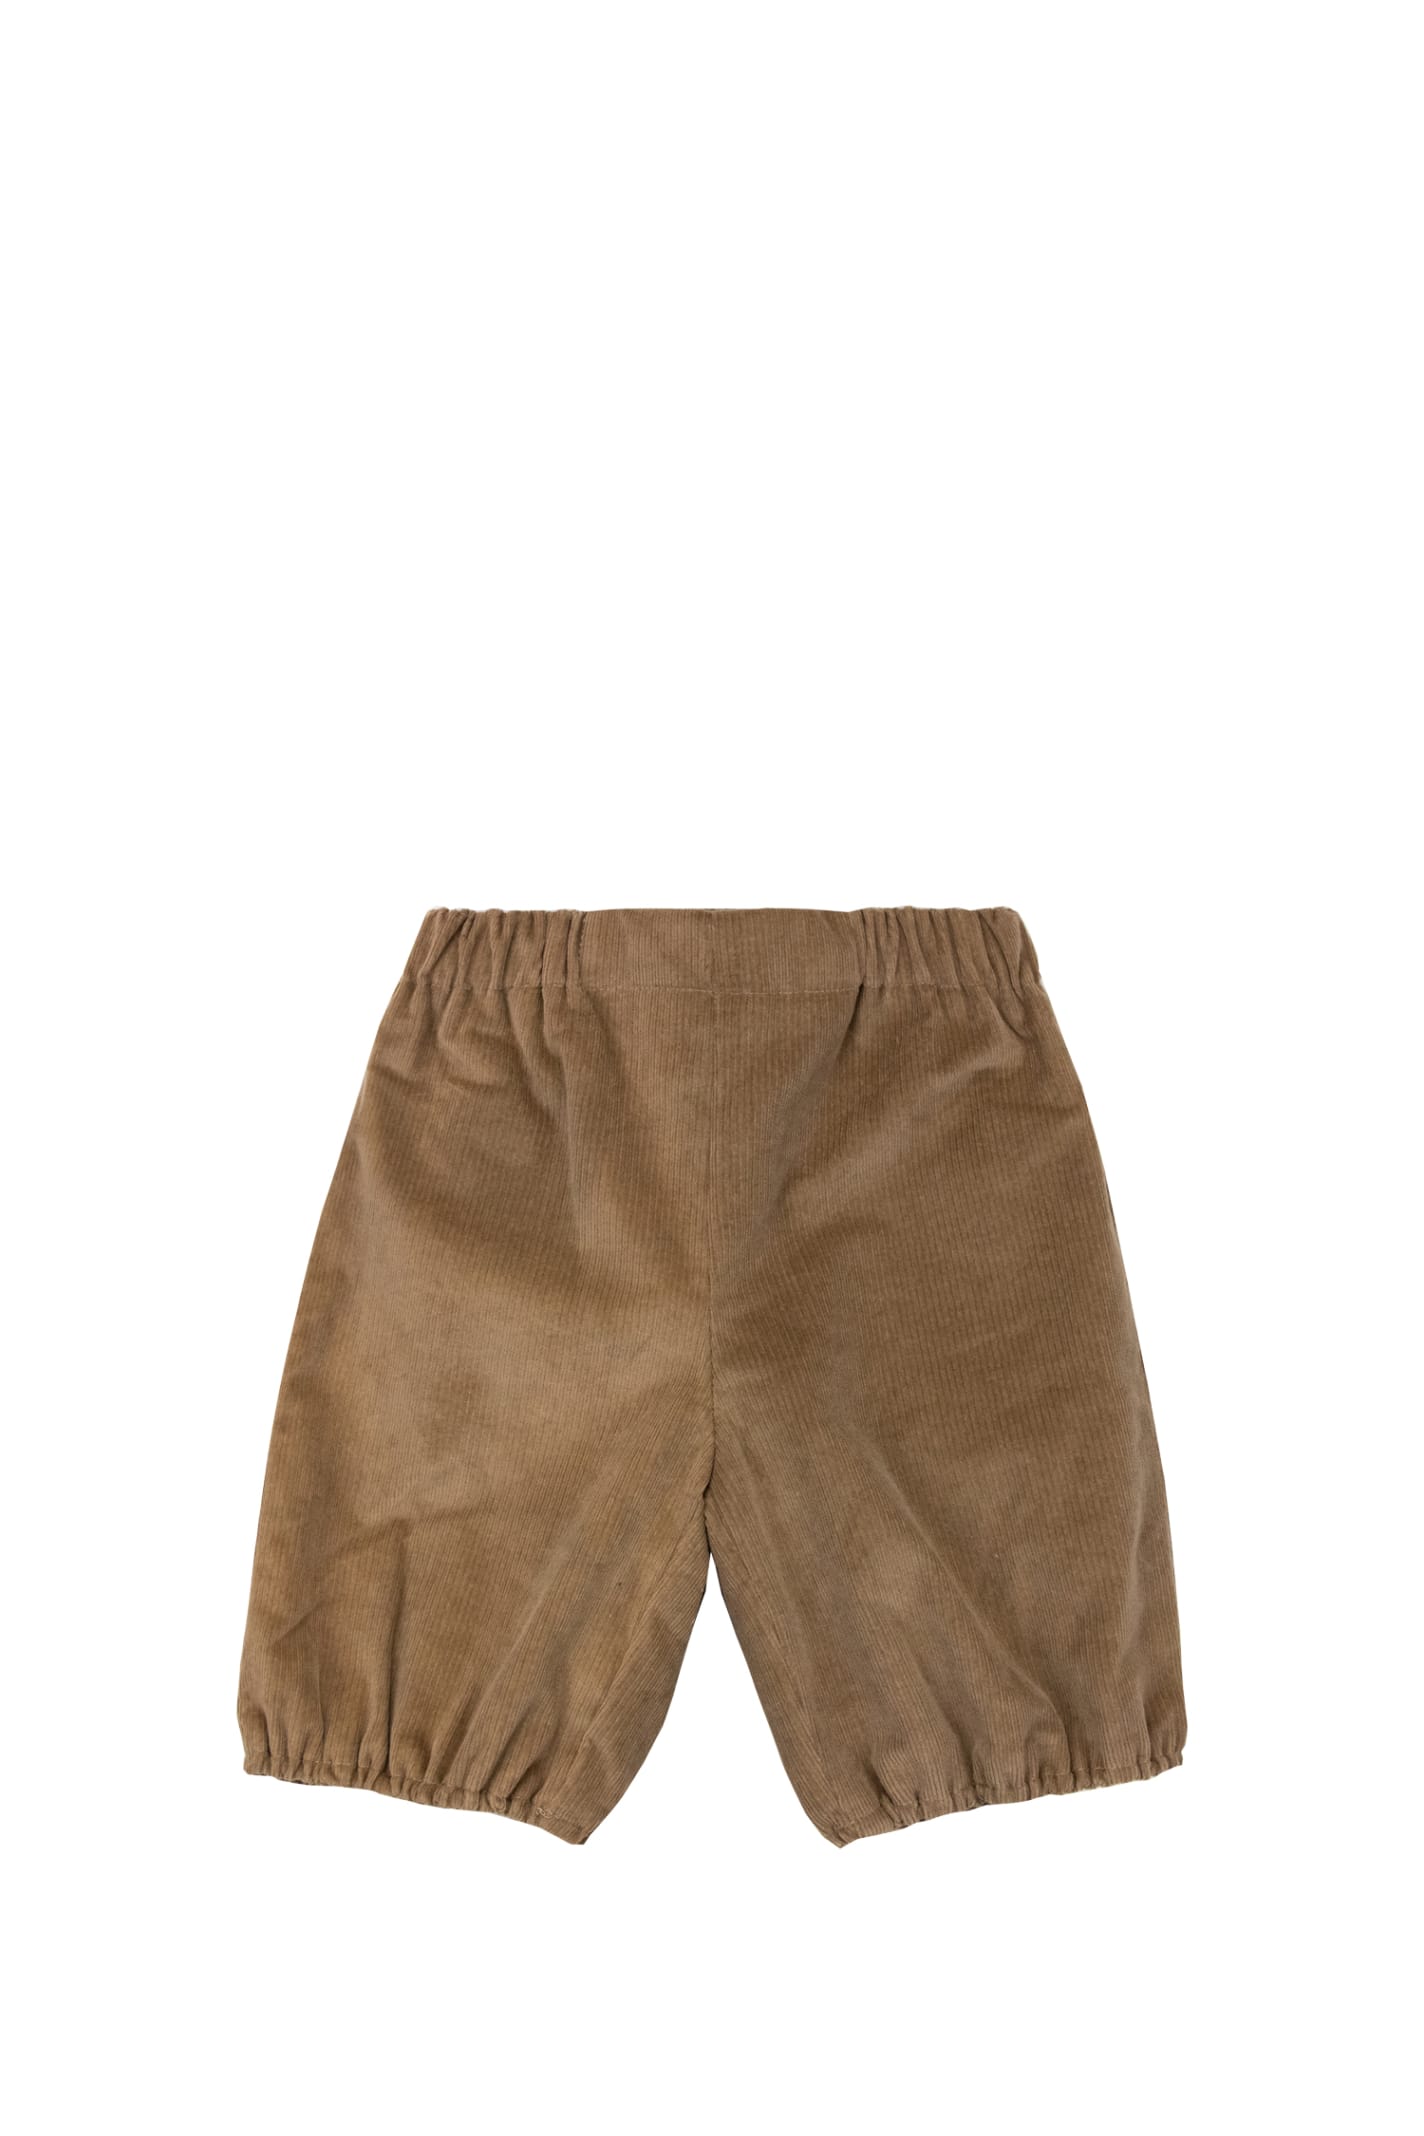 La Stupenderia Kids' Shorts In Brown